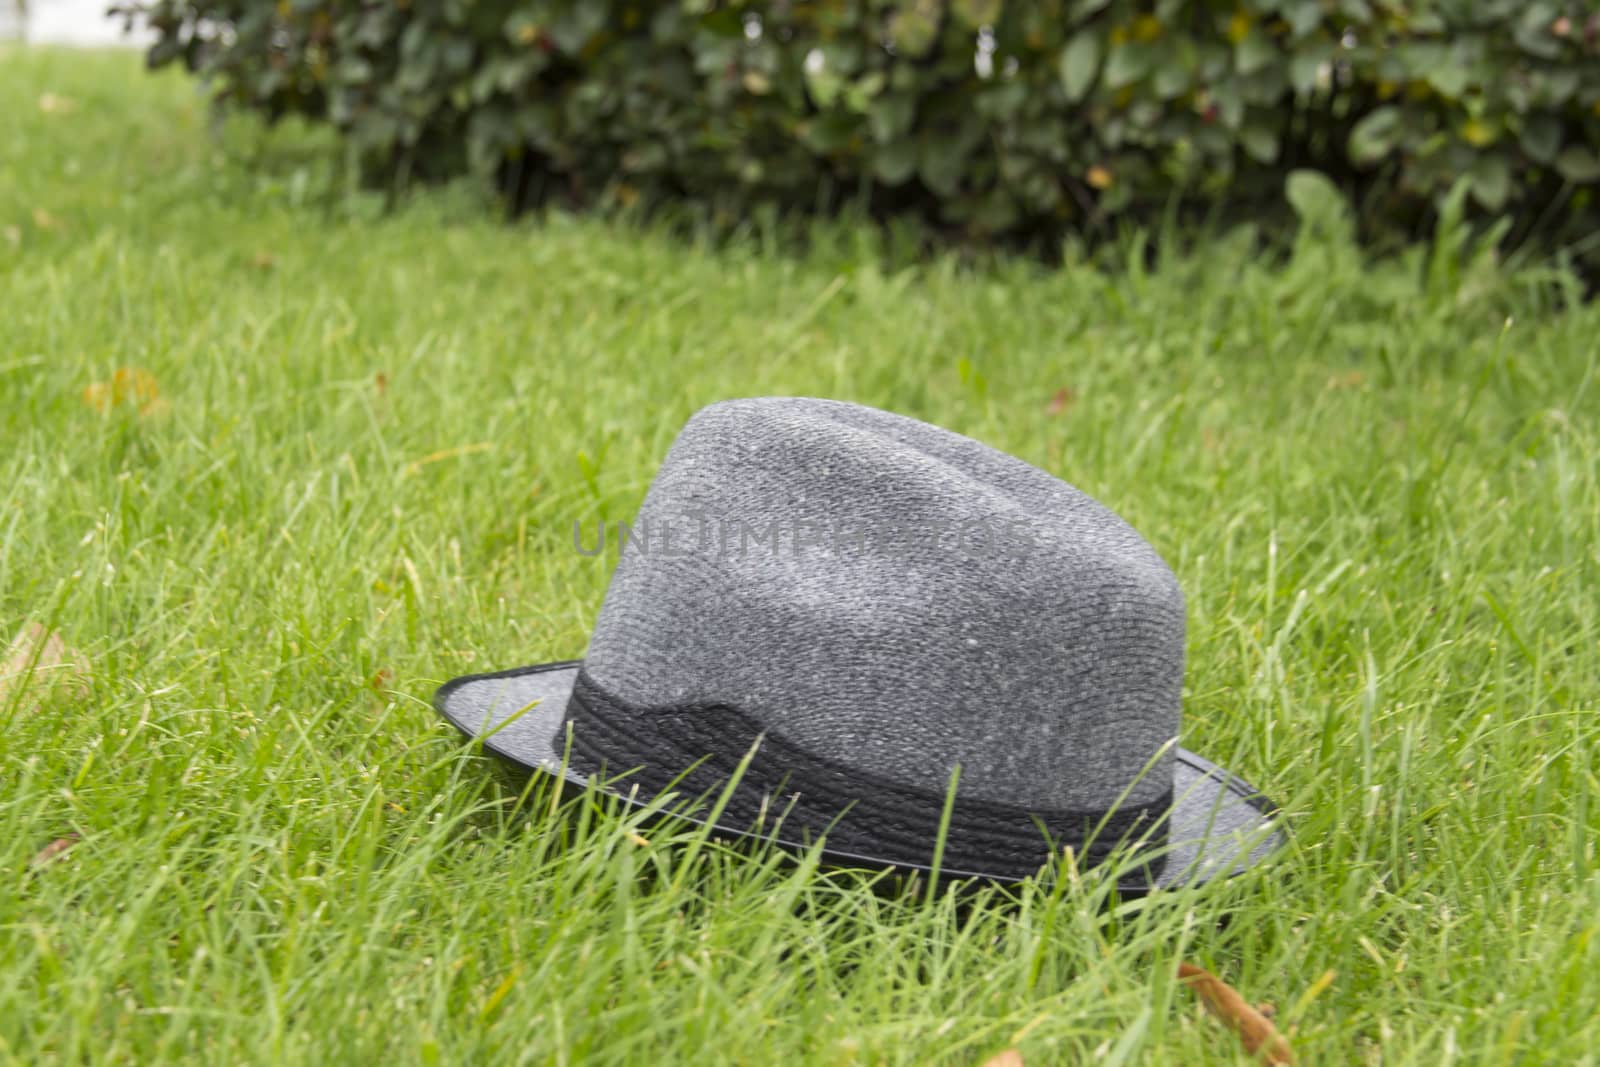 Men's Grey Hat lies summer day on the green grass